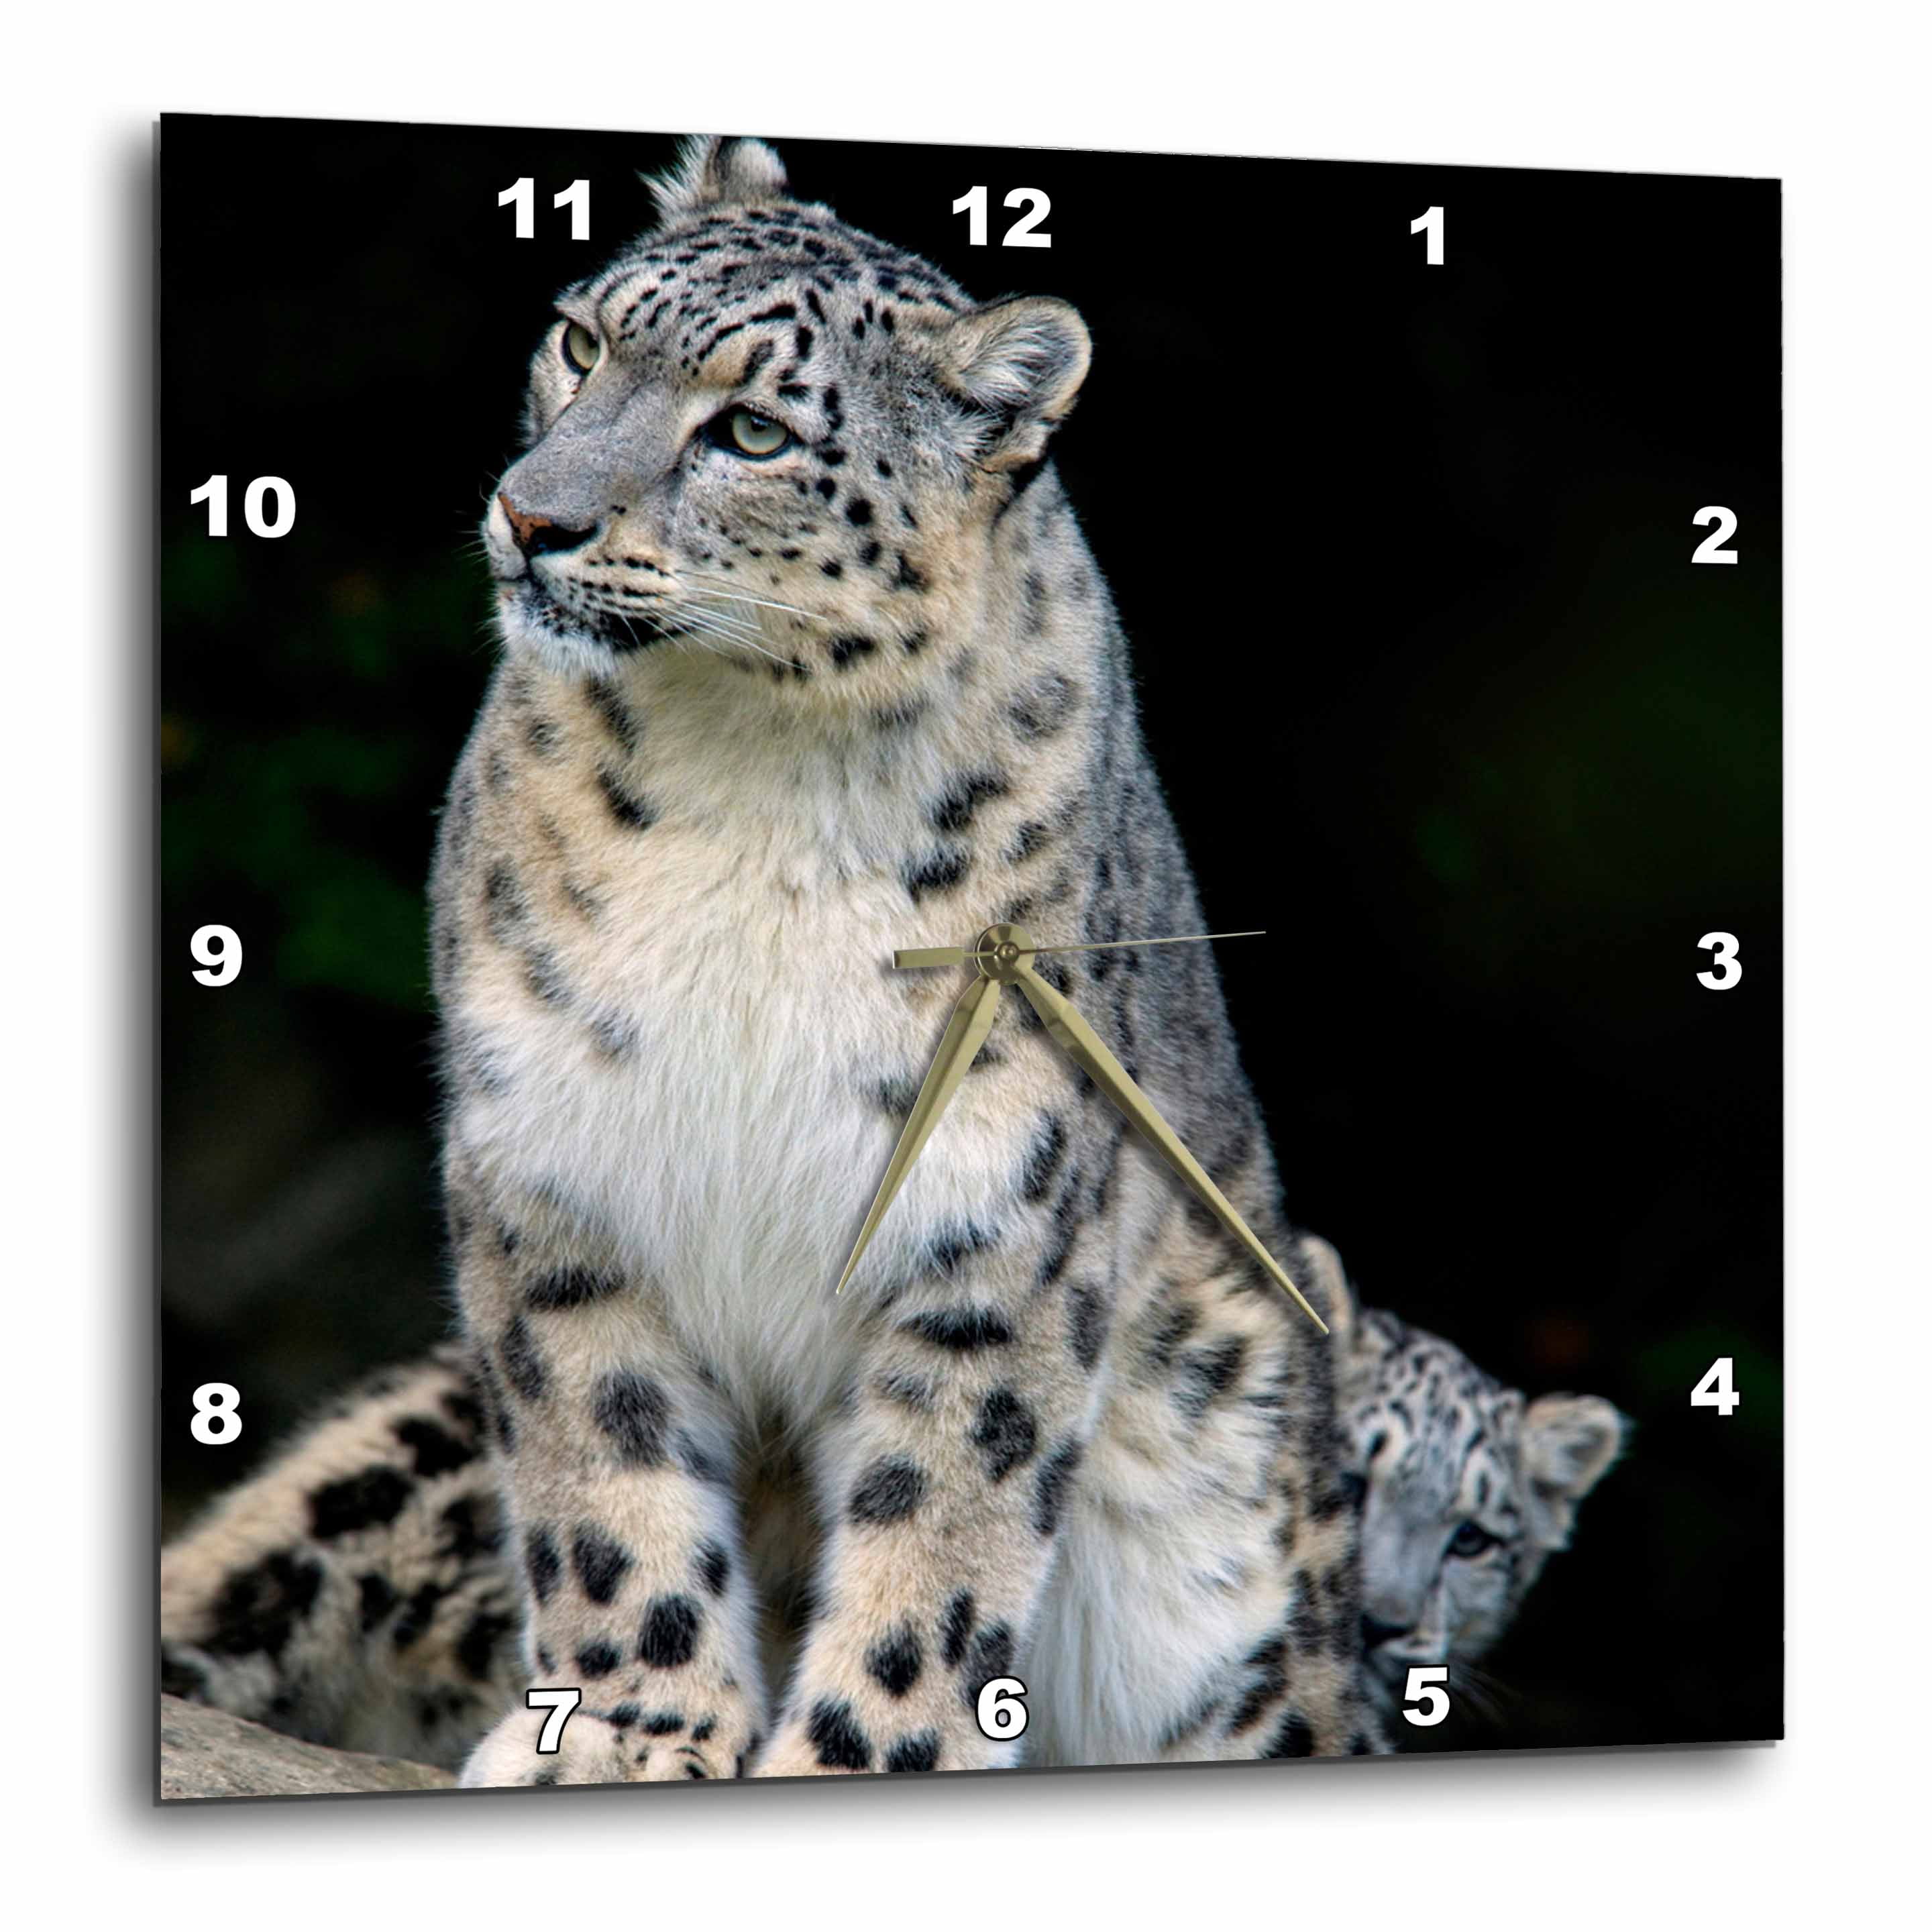 3dRose DPP1328493 Snow Leopard Panthera Uncia Asia As26 Amr0000 and Res  Morya Hinojosa Wall Clock 15 by 15-Inch レビュー高評価の商品 インテリア・寝具 